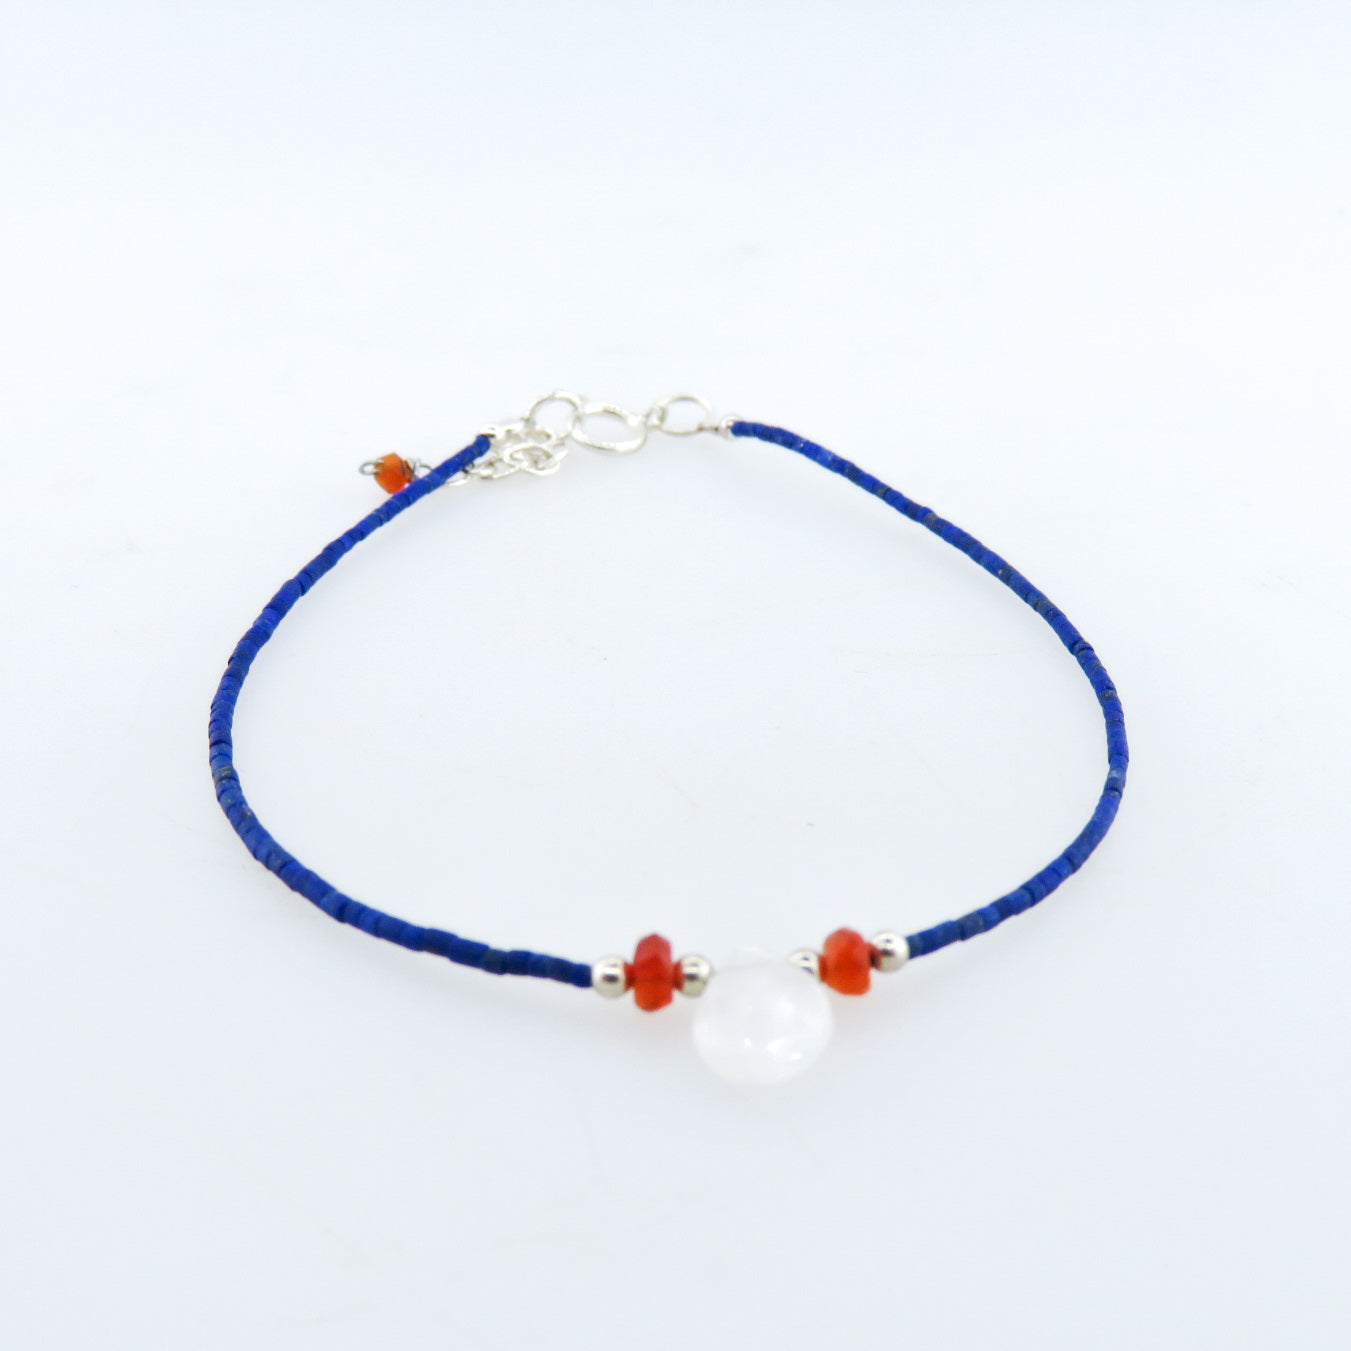 Lapis Lazuli Bracelet with Rainbow Moon Stone, Carnelian and Silver Beads